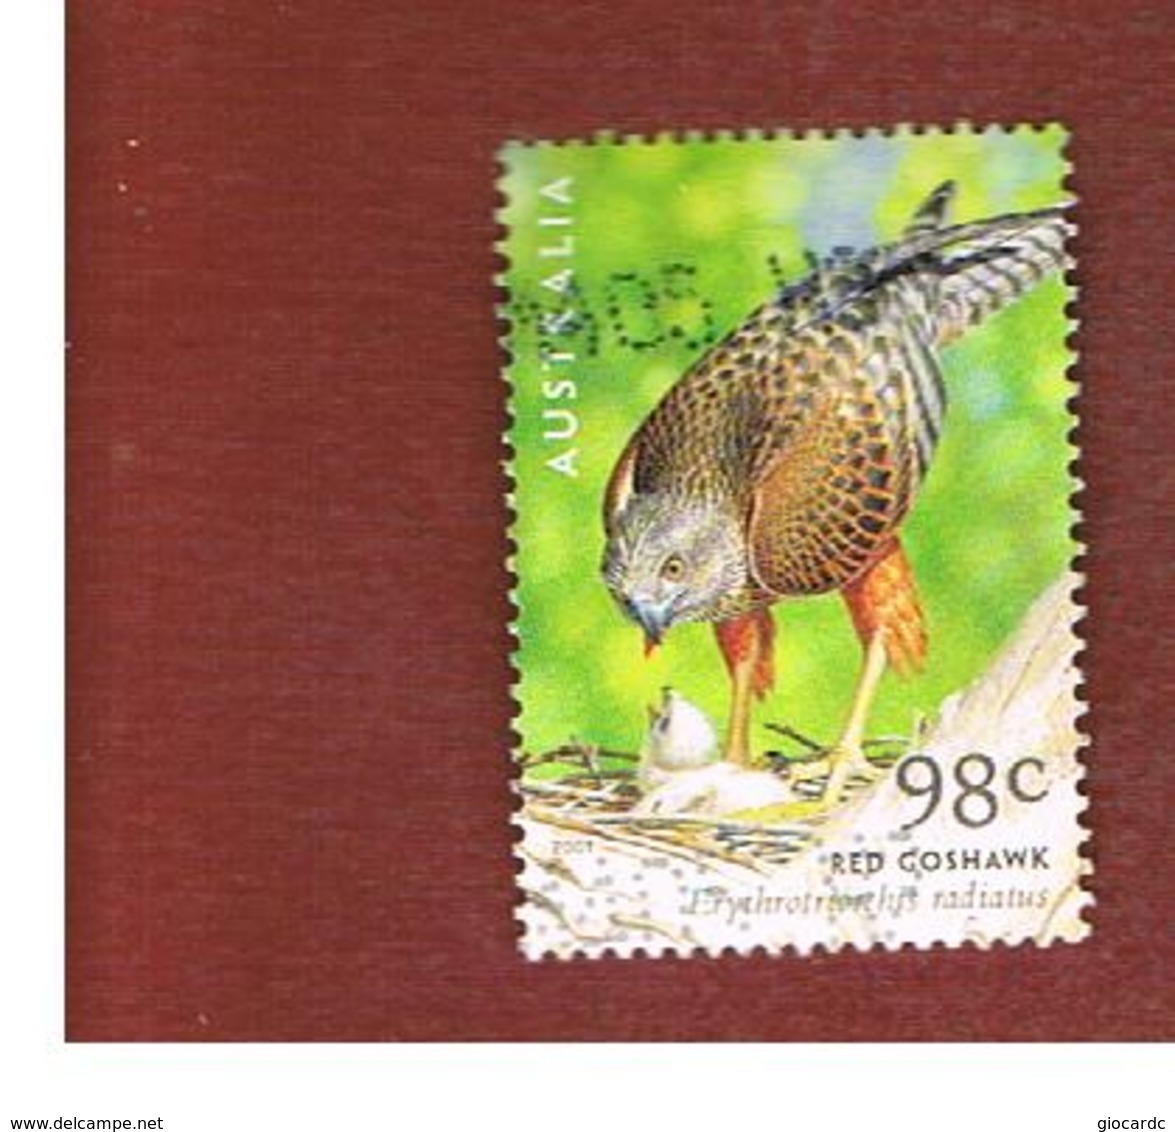 AUSTRALIA  -  SG 2142    -      2001   BIRD OF PREY:  RED GOSHAWK     -       USED - Usati